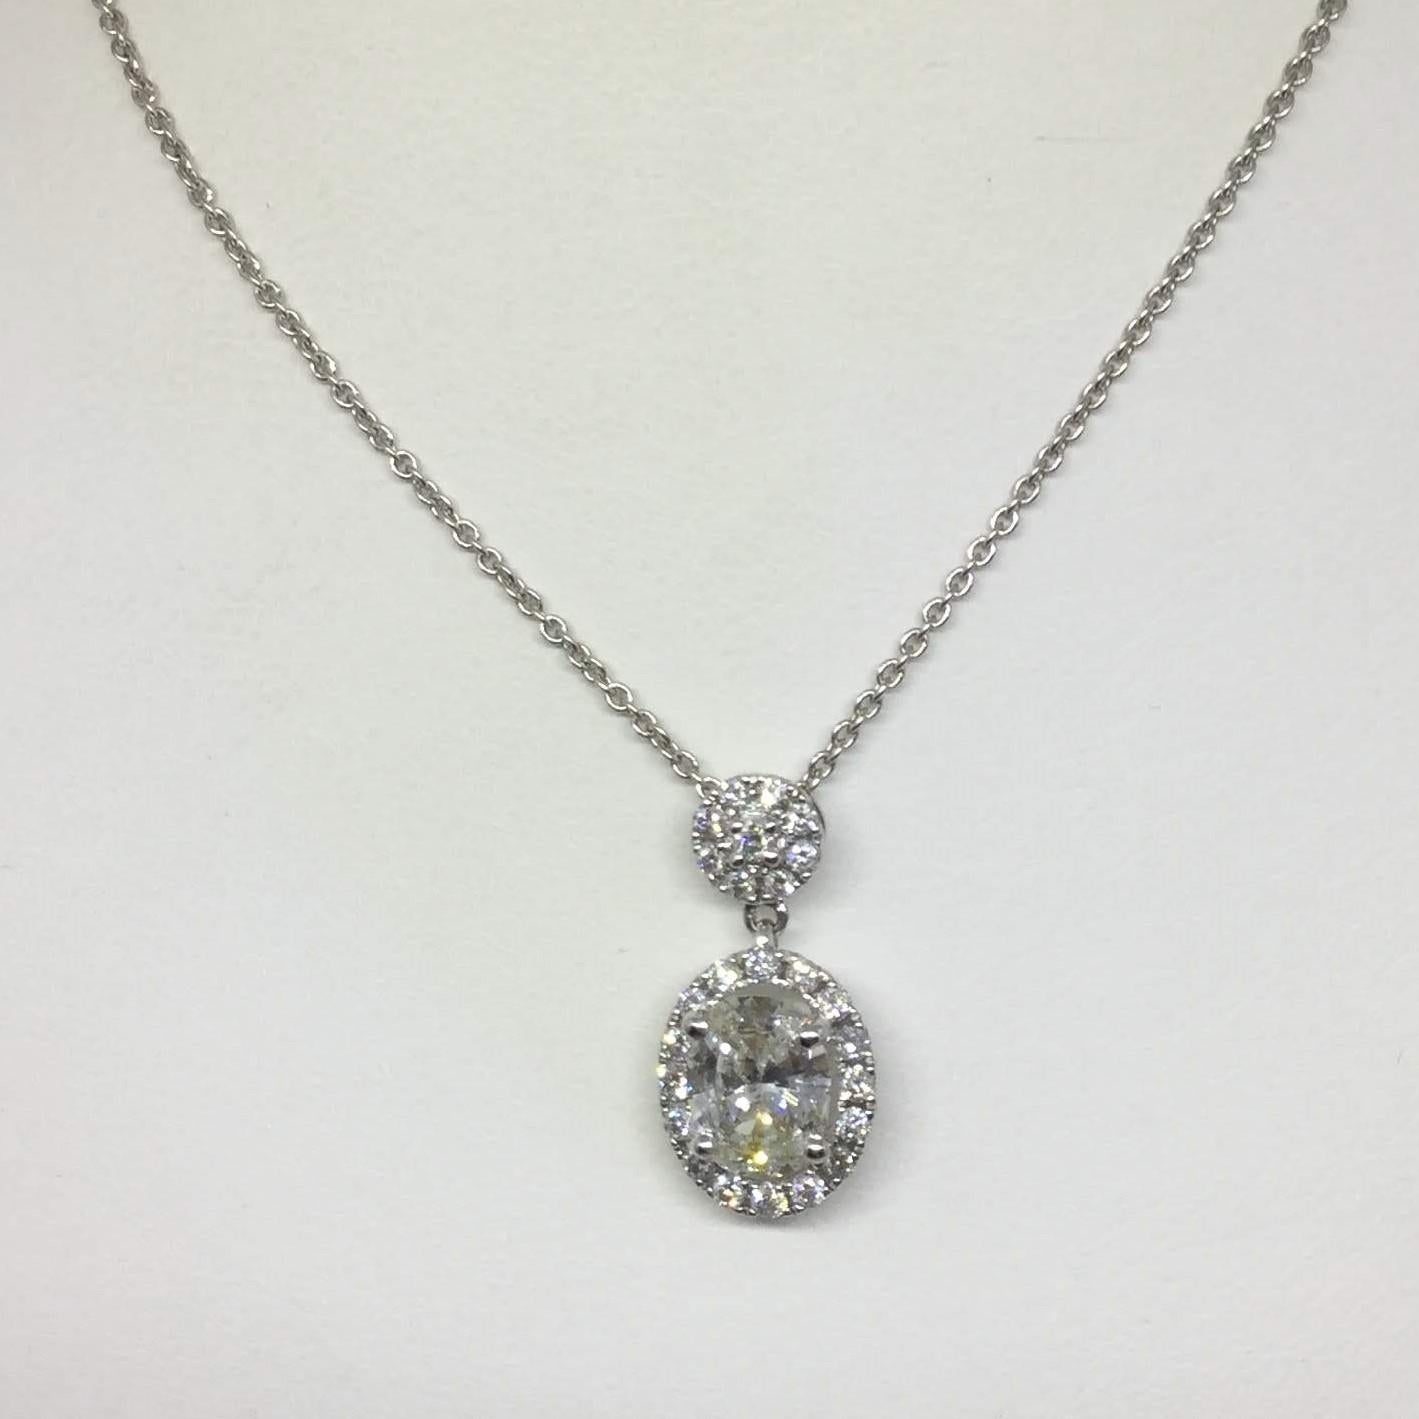 Oval Cut 14 Karat White Gold Diamond Pendant Necklace 0.83 Carat For Sale